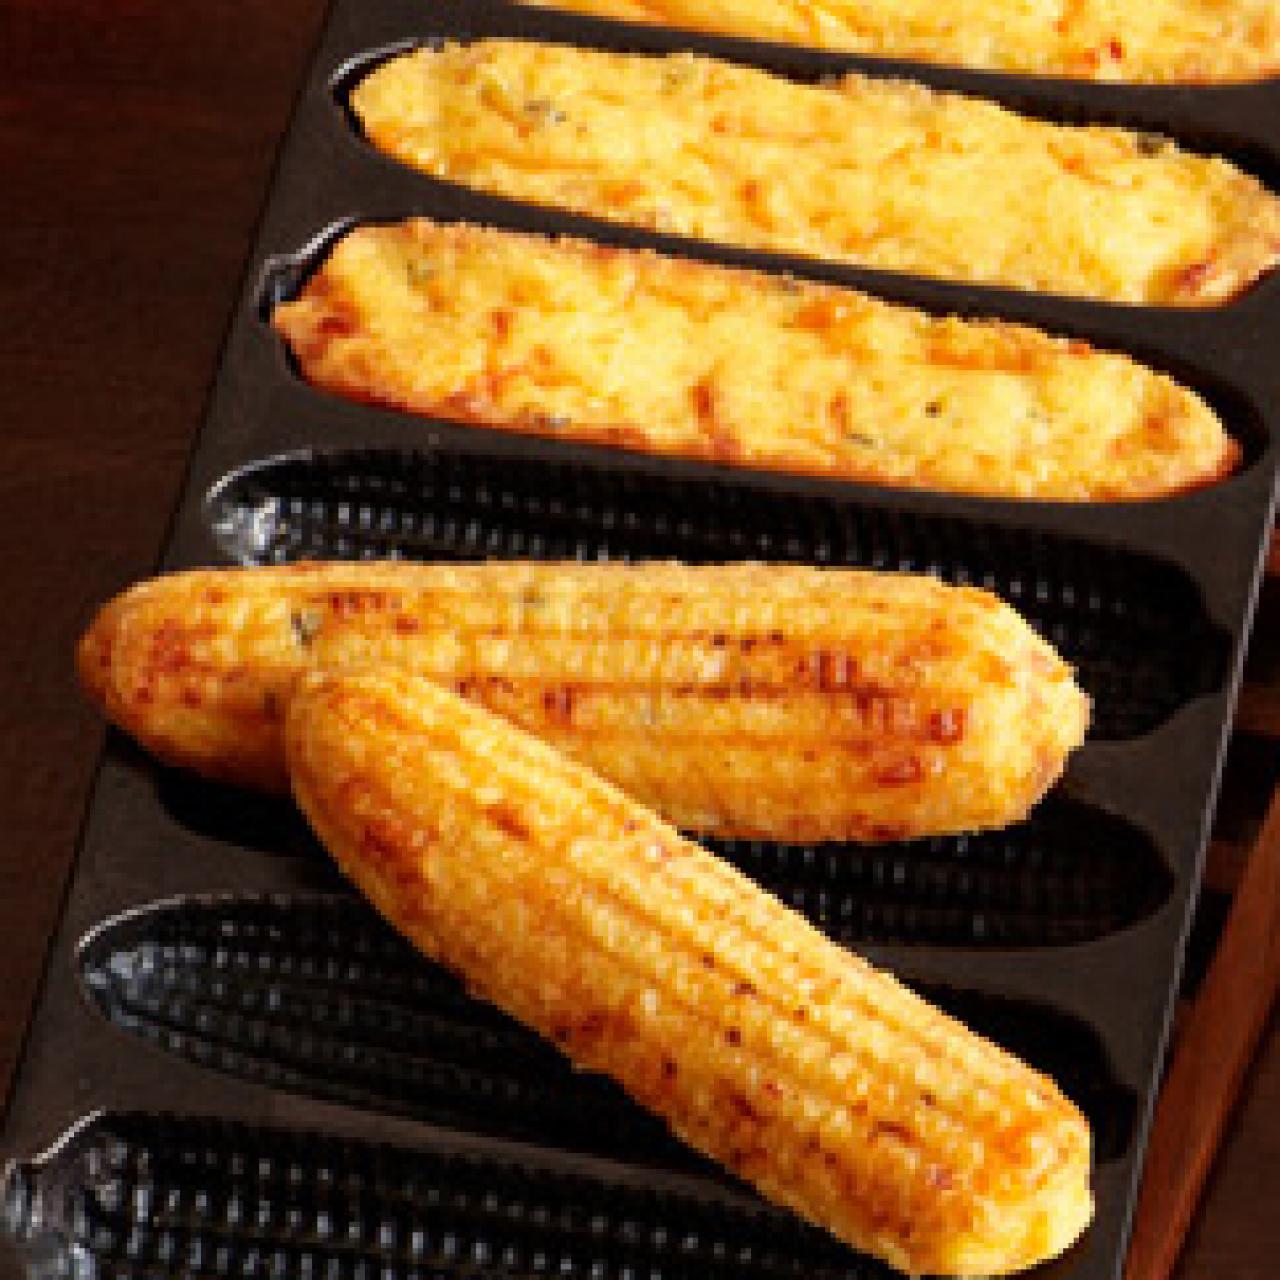 Lot45 Cast Iron Cornbread Pan for 7 Sticks - Corn Shaped Baking Pan for  Oven Baking Corn Stick, Bread, Fritters, Cake